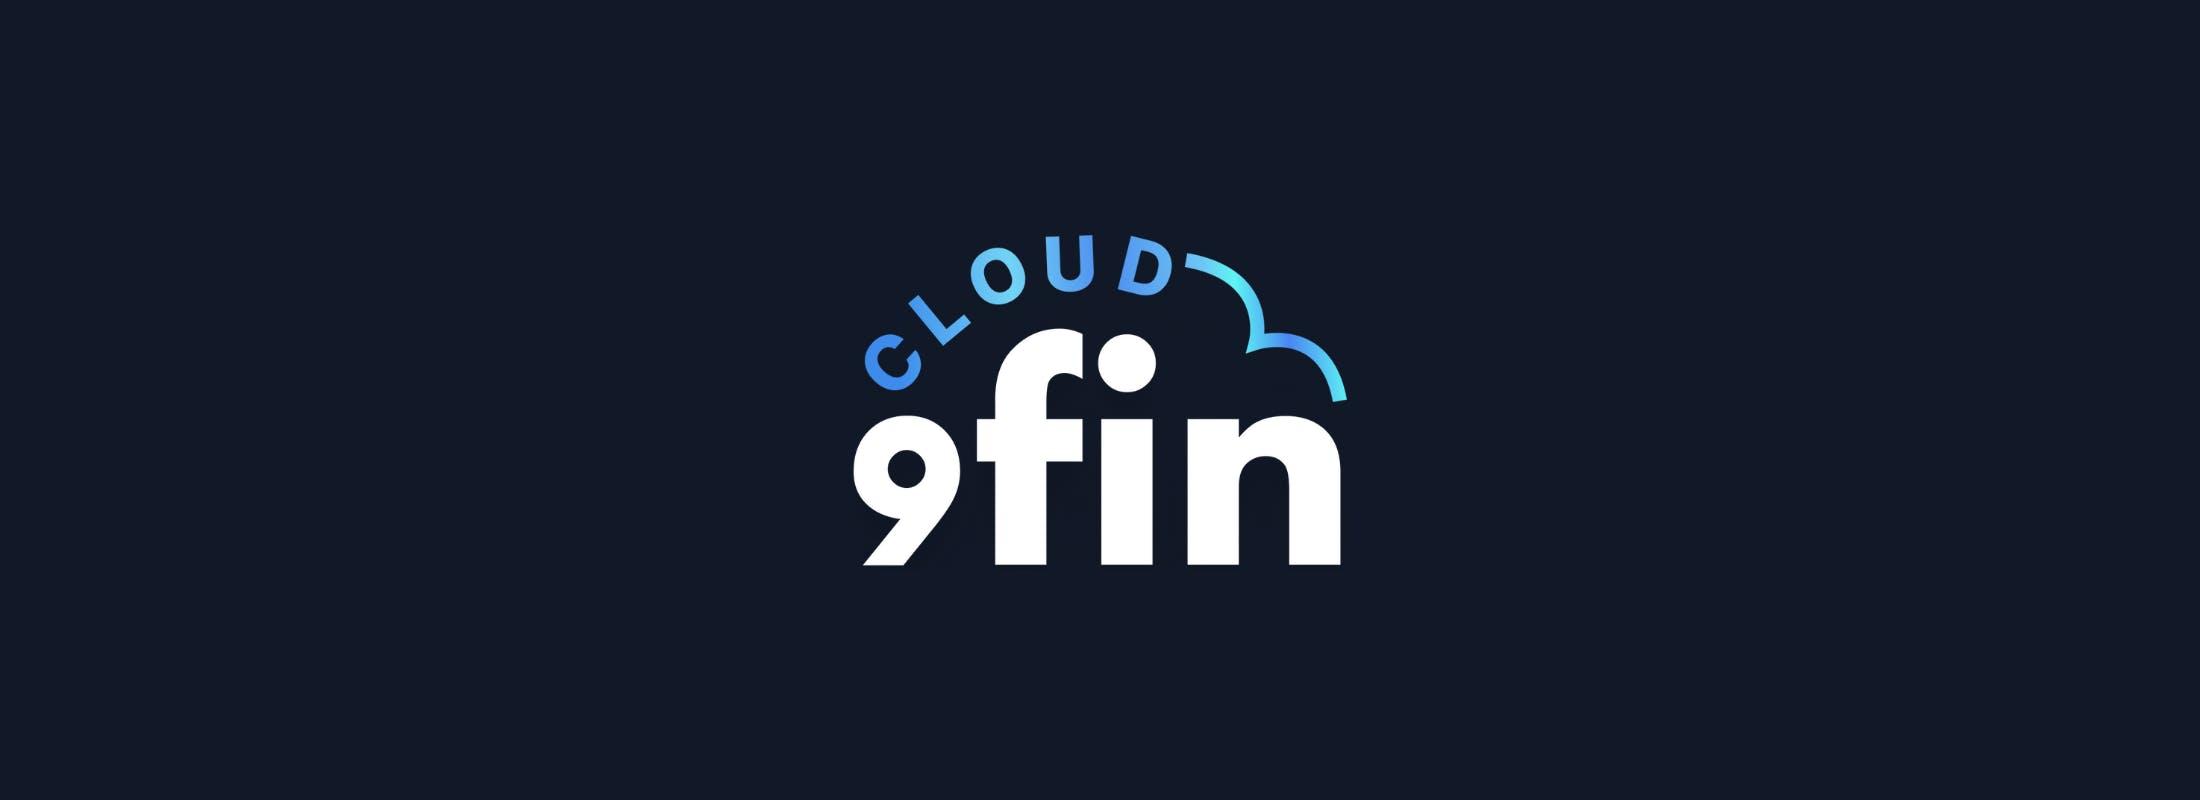 Cloud 9fin — The Steward situation is batsh*t crazy